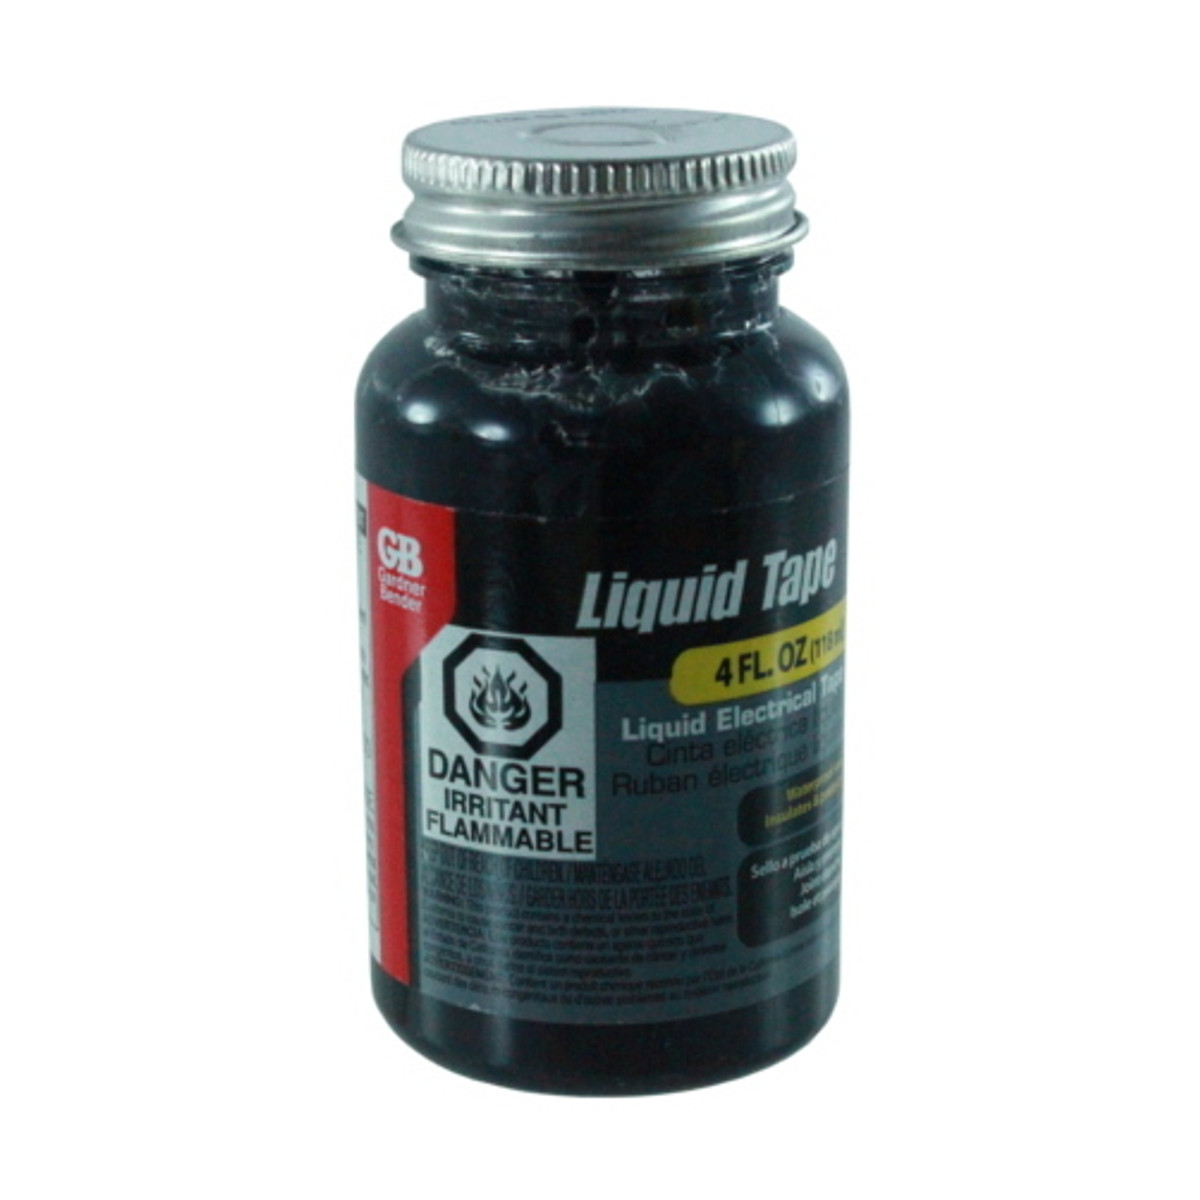 4 oz. Black Liquid Electrical Tape - Greschlers Hardware